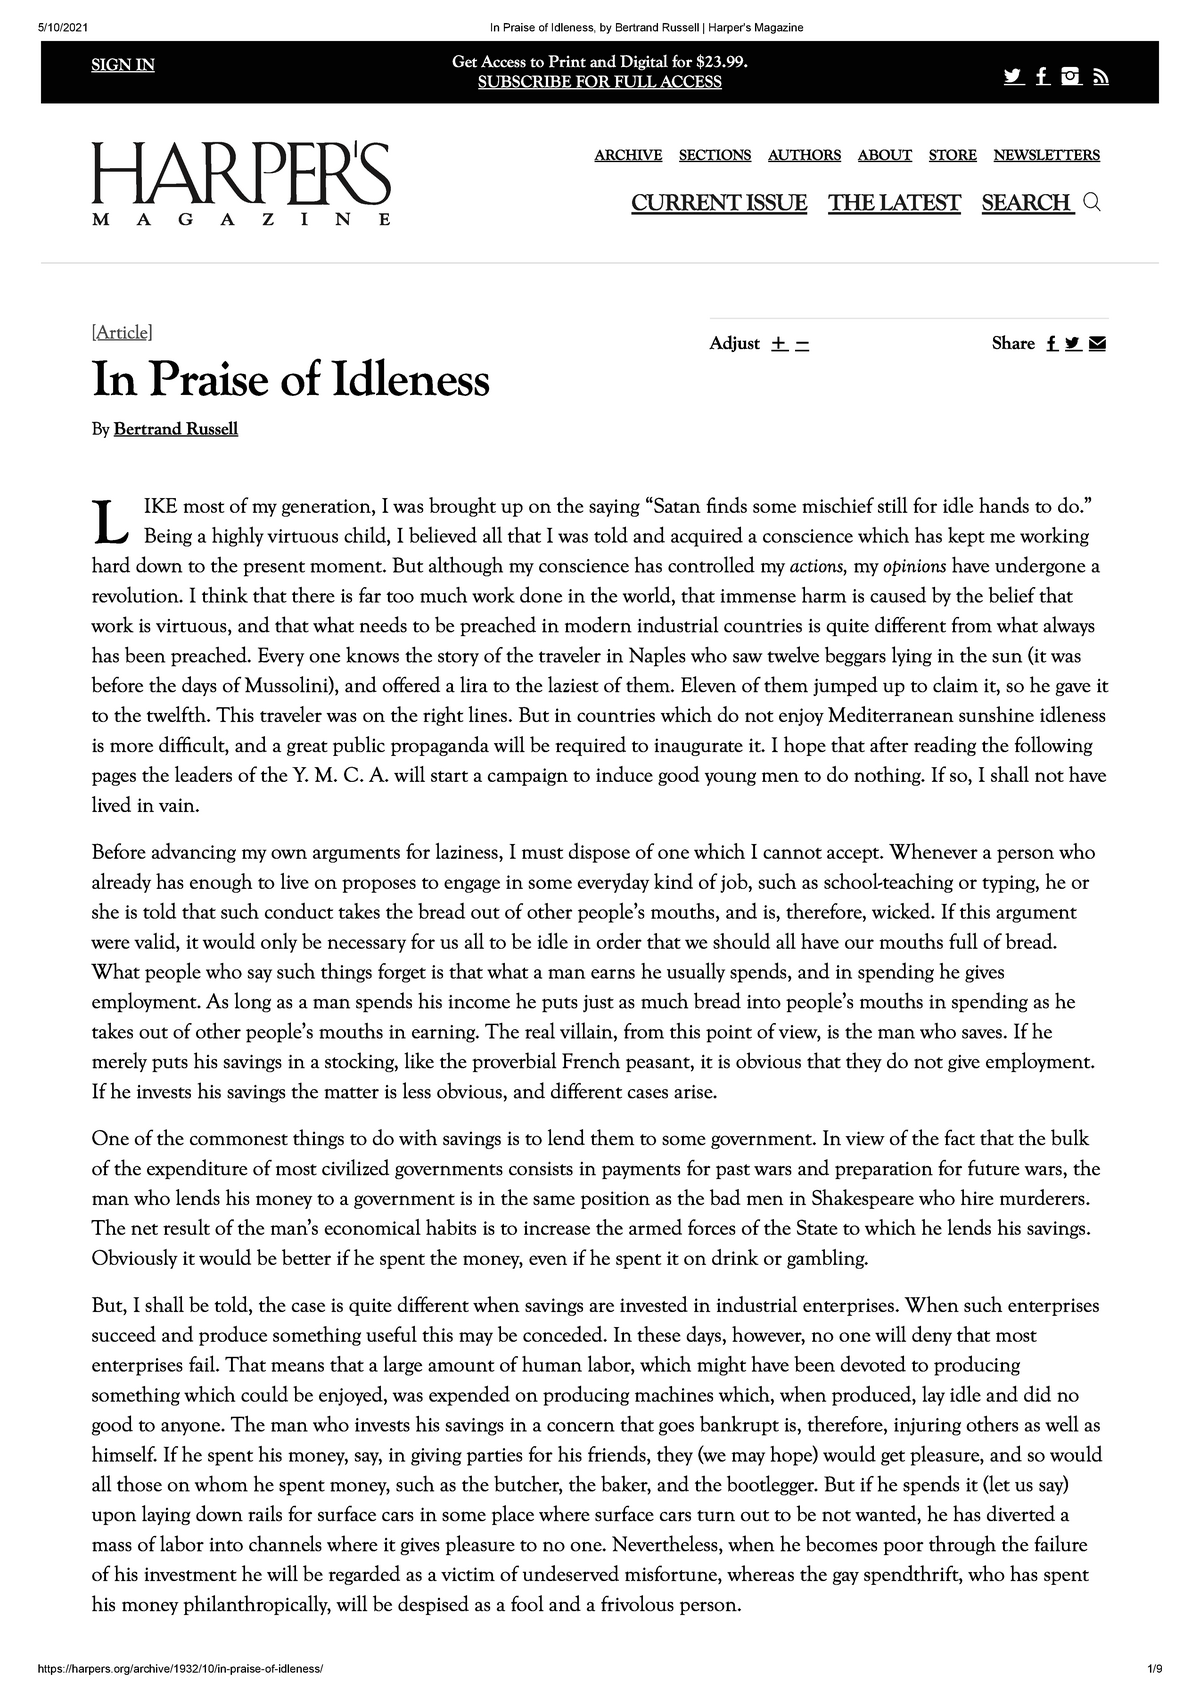 essays of idleness